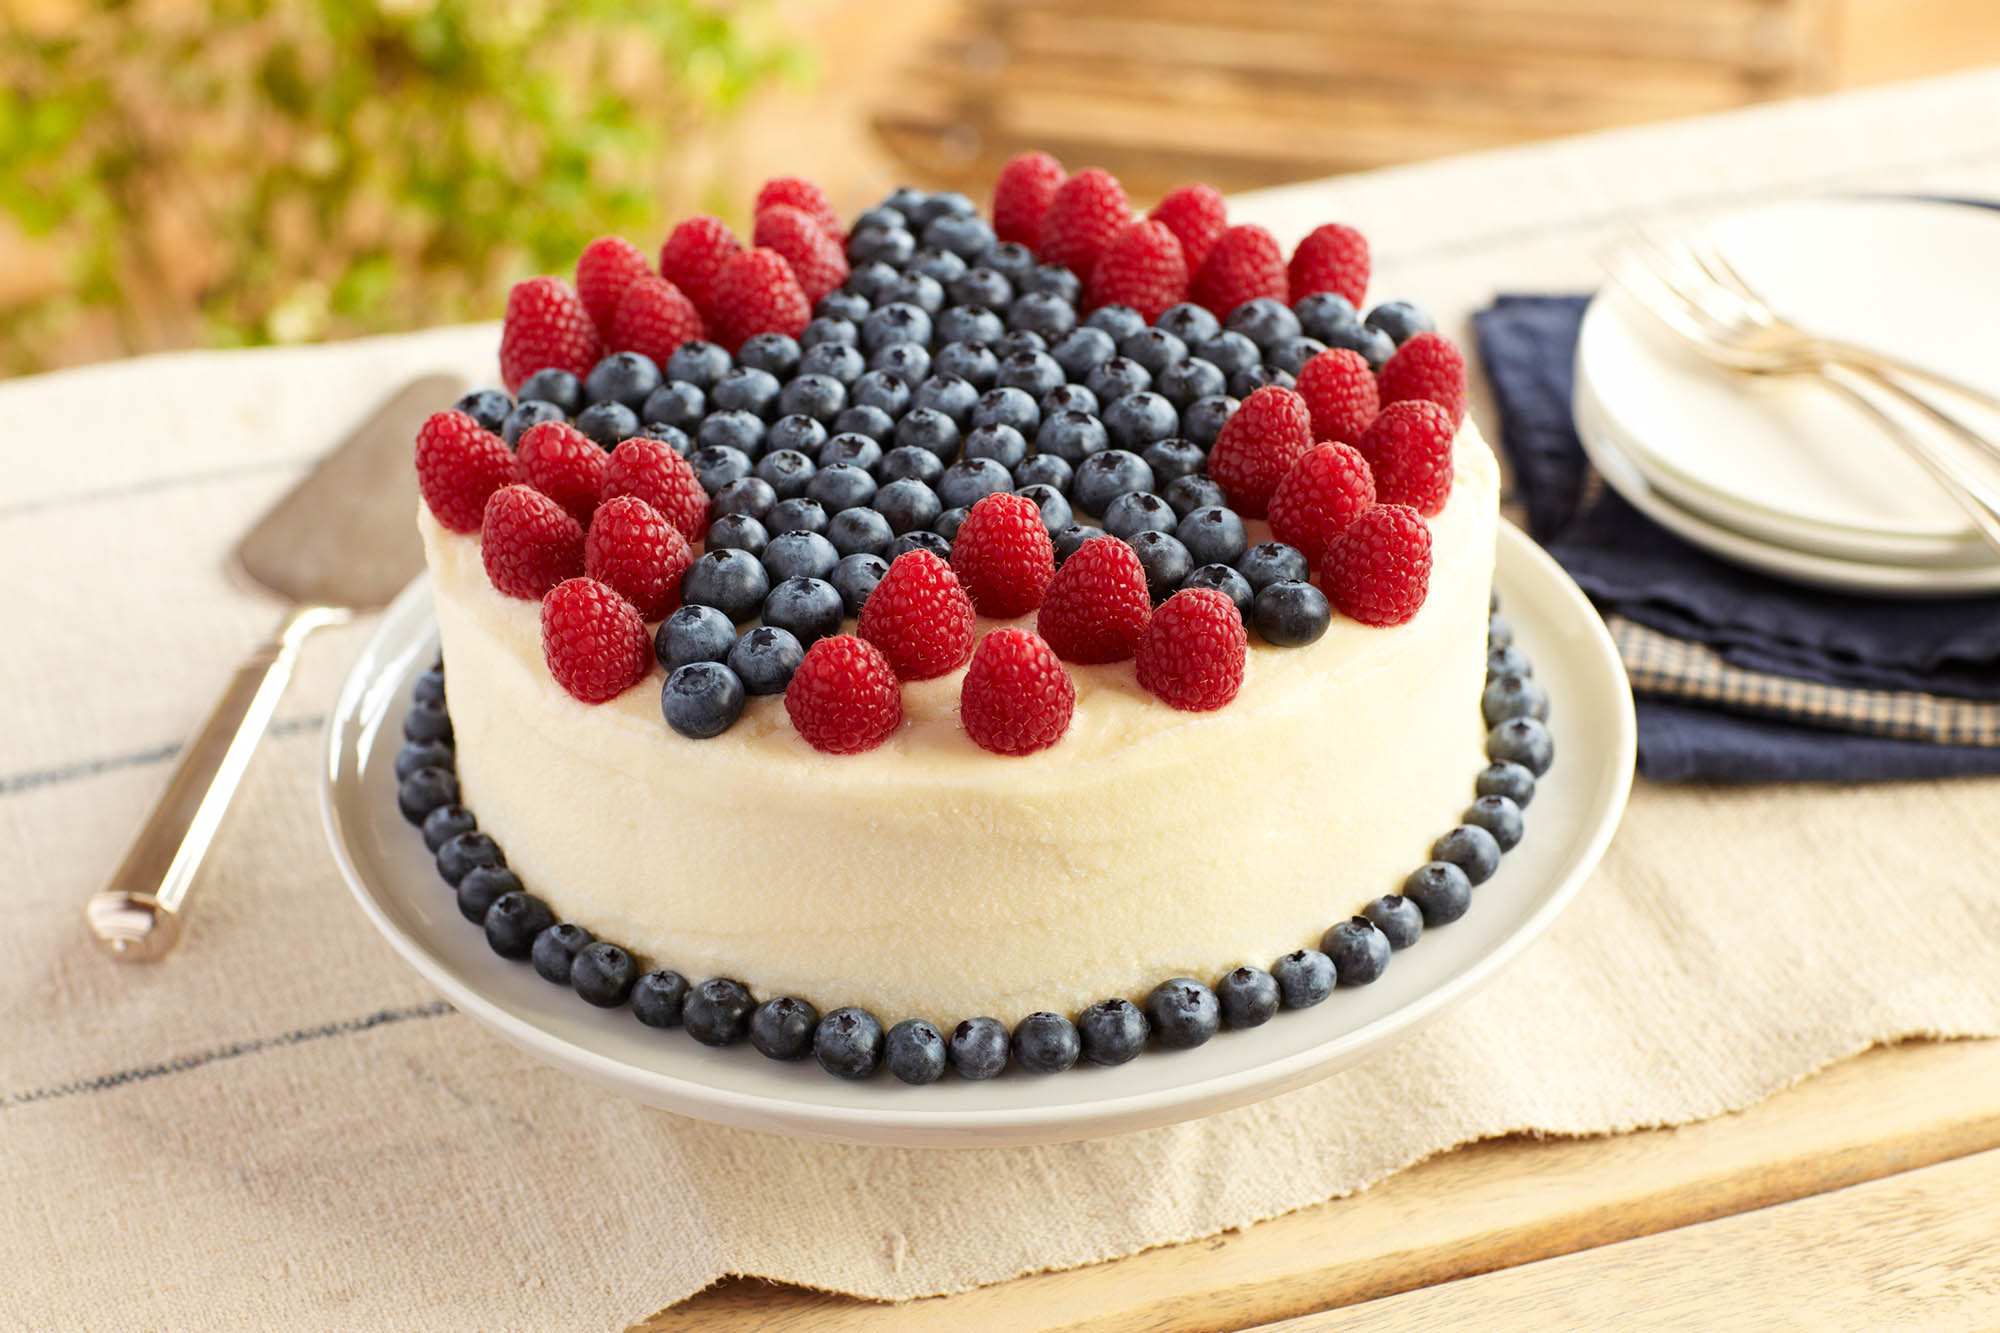 Lemon Blueberry Layer Cake with Fresh Raspberries